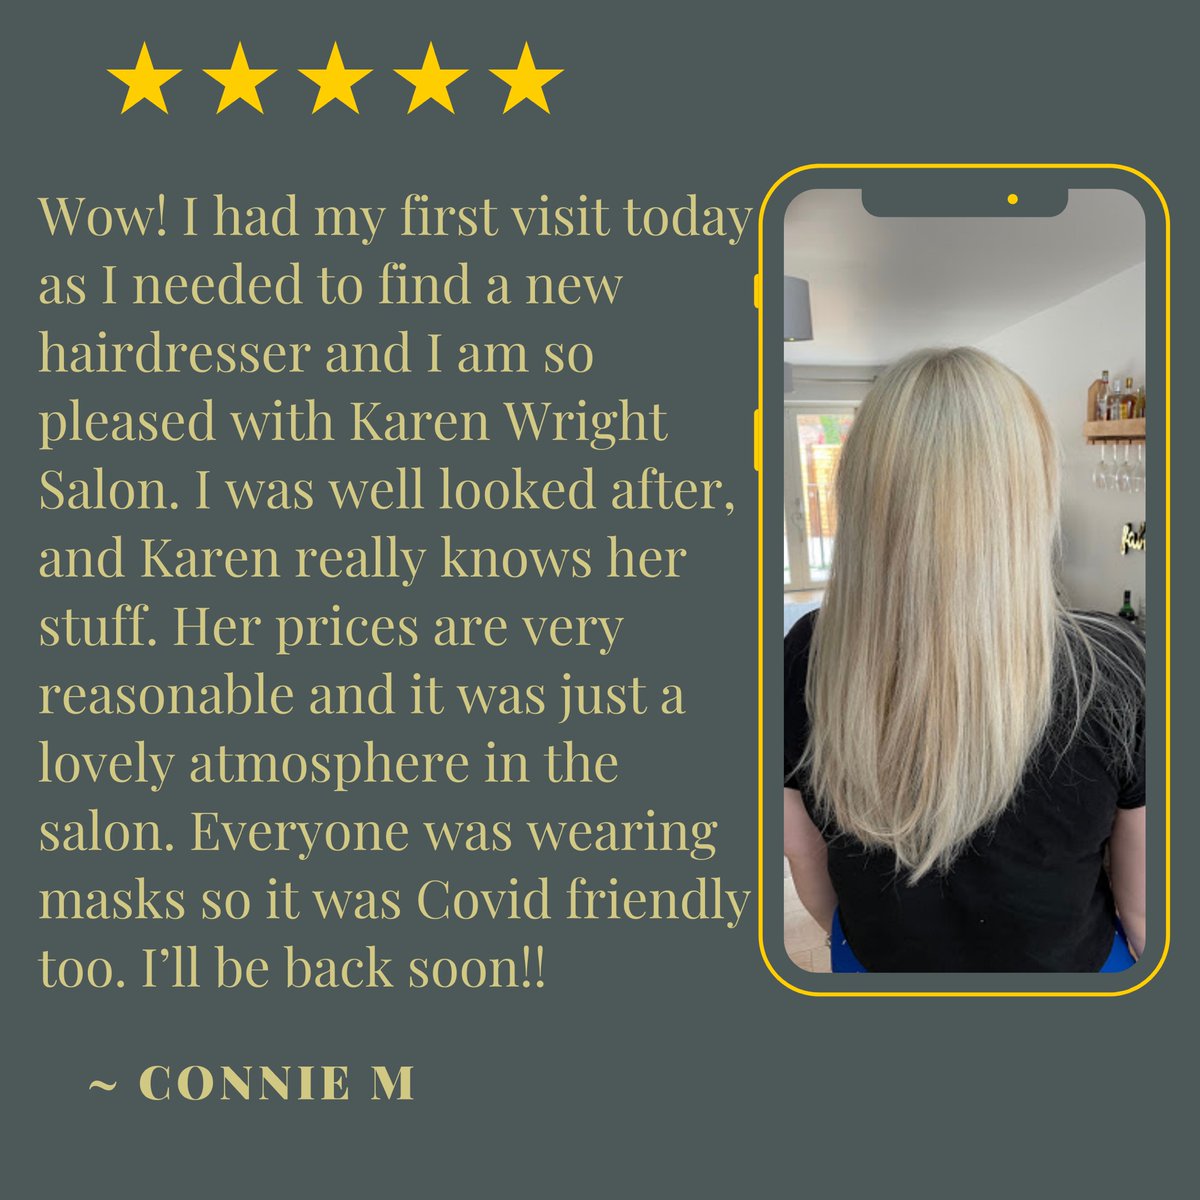 #feedbackfriday lovely review from @conniemuir 
#karenwrightsalon #hairsalon #hairsalonthorntonheath #haircare #haircolour #davineshaircolour #organichaircare